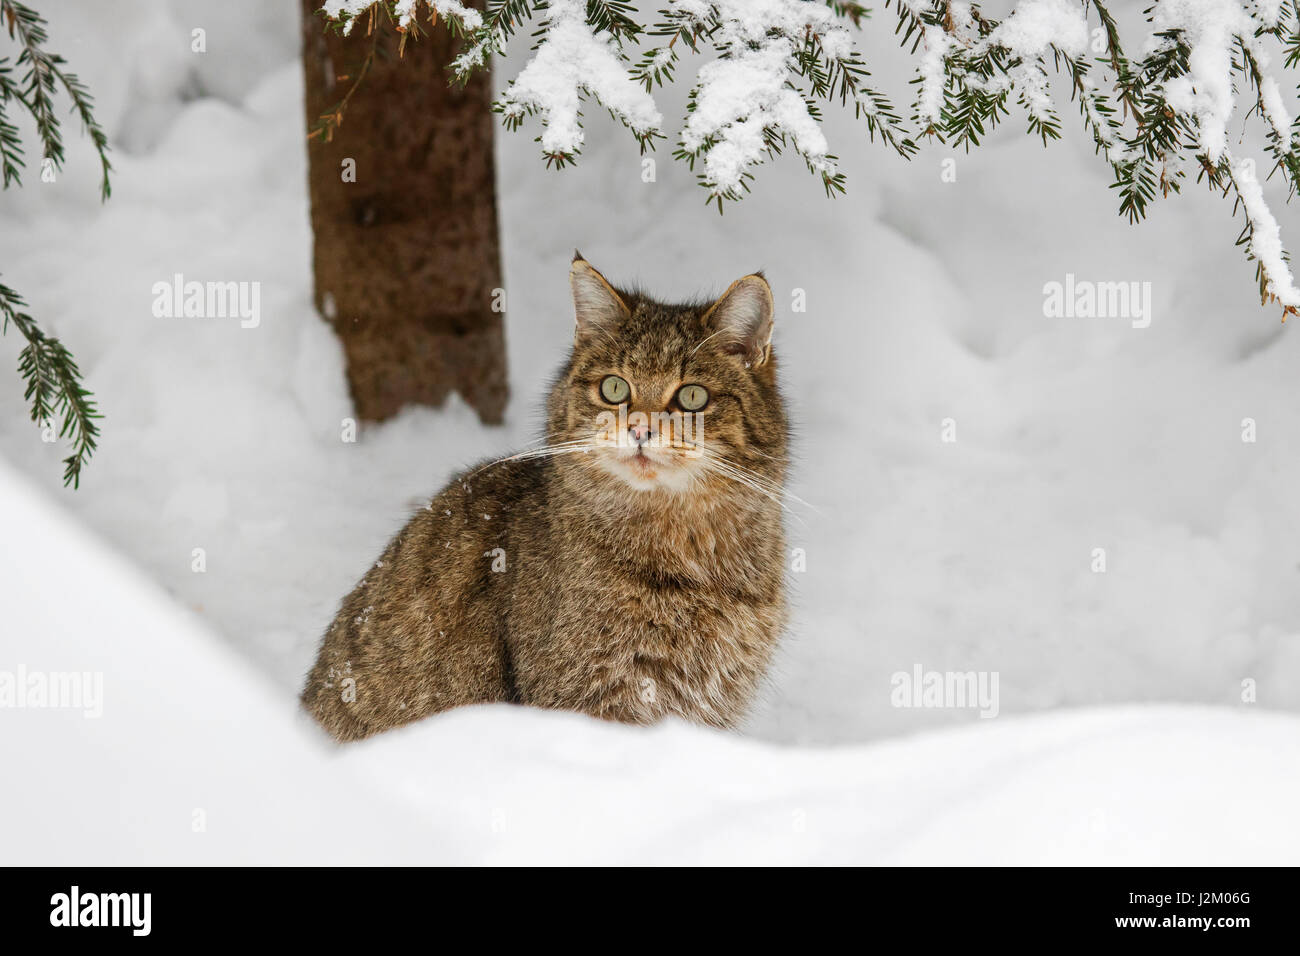 Gato montés europeo (Felis silvestris silvestris) sentados en la nieve en invierno Foto de stock